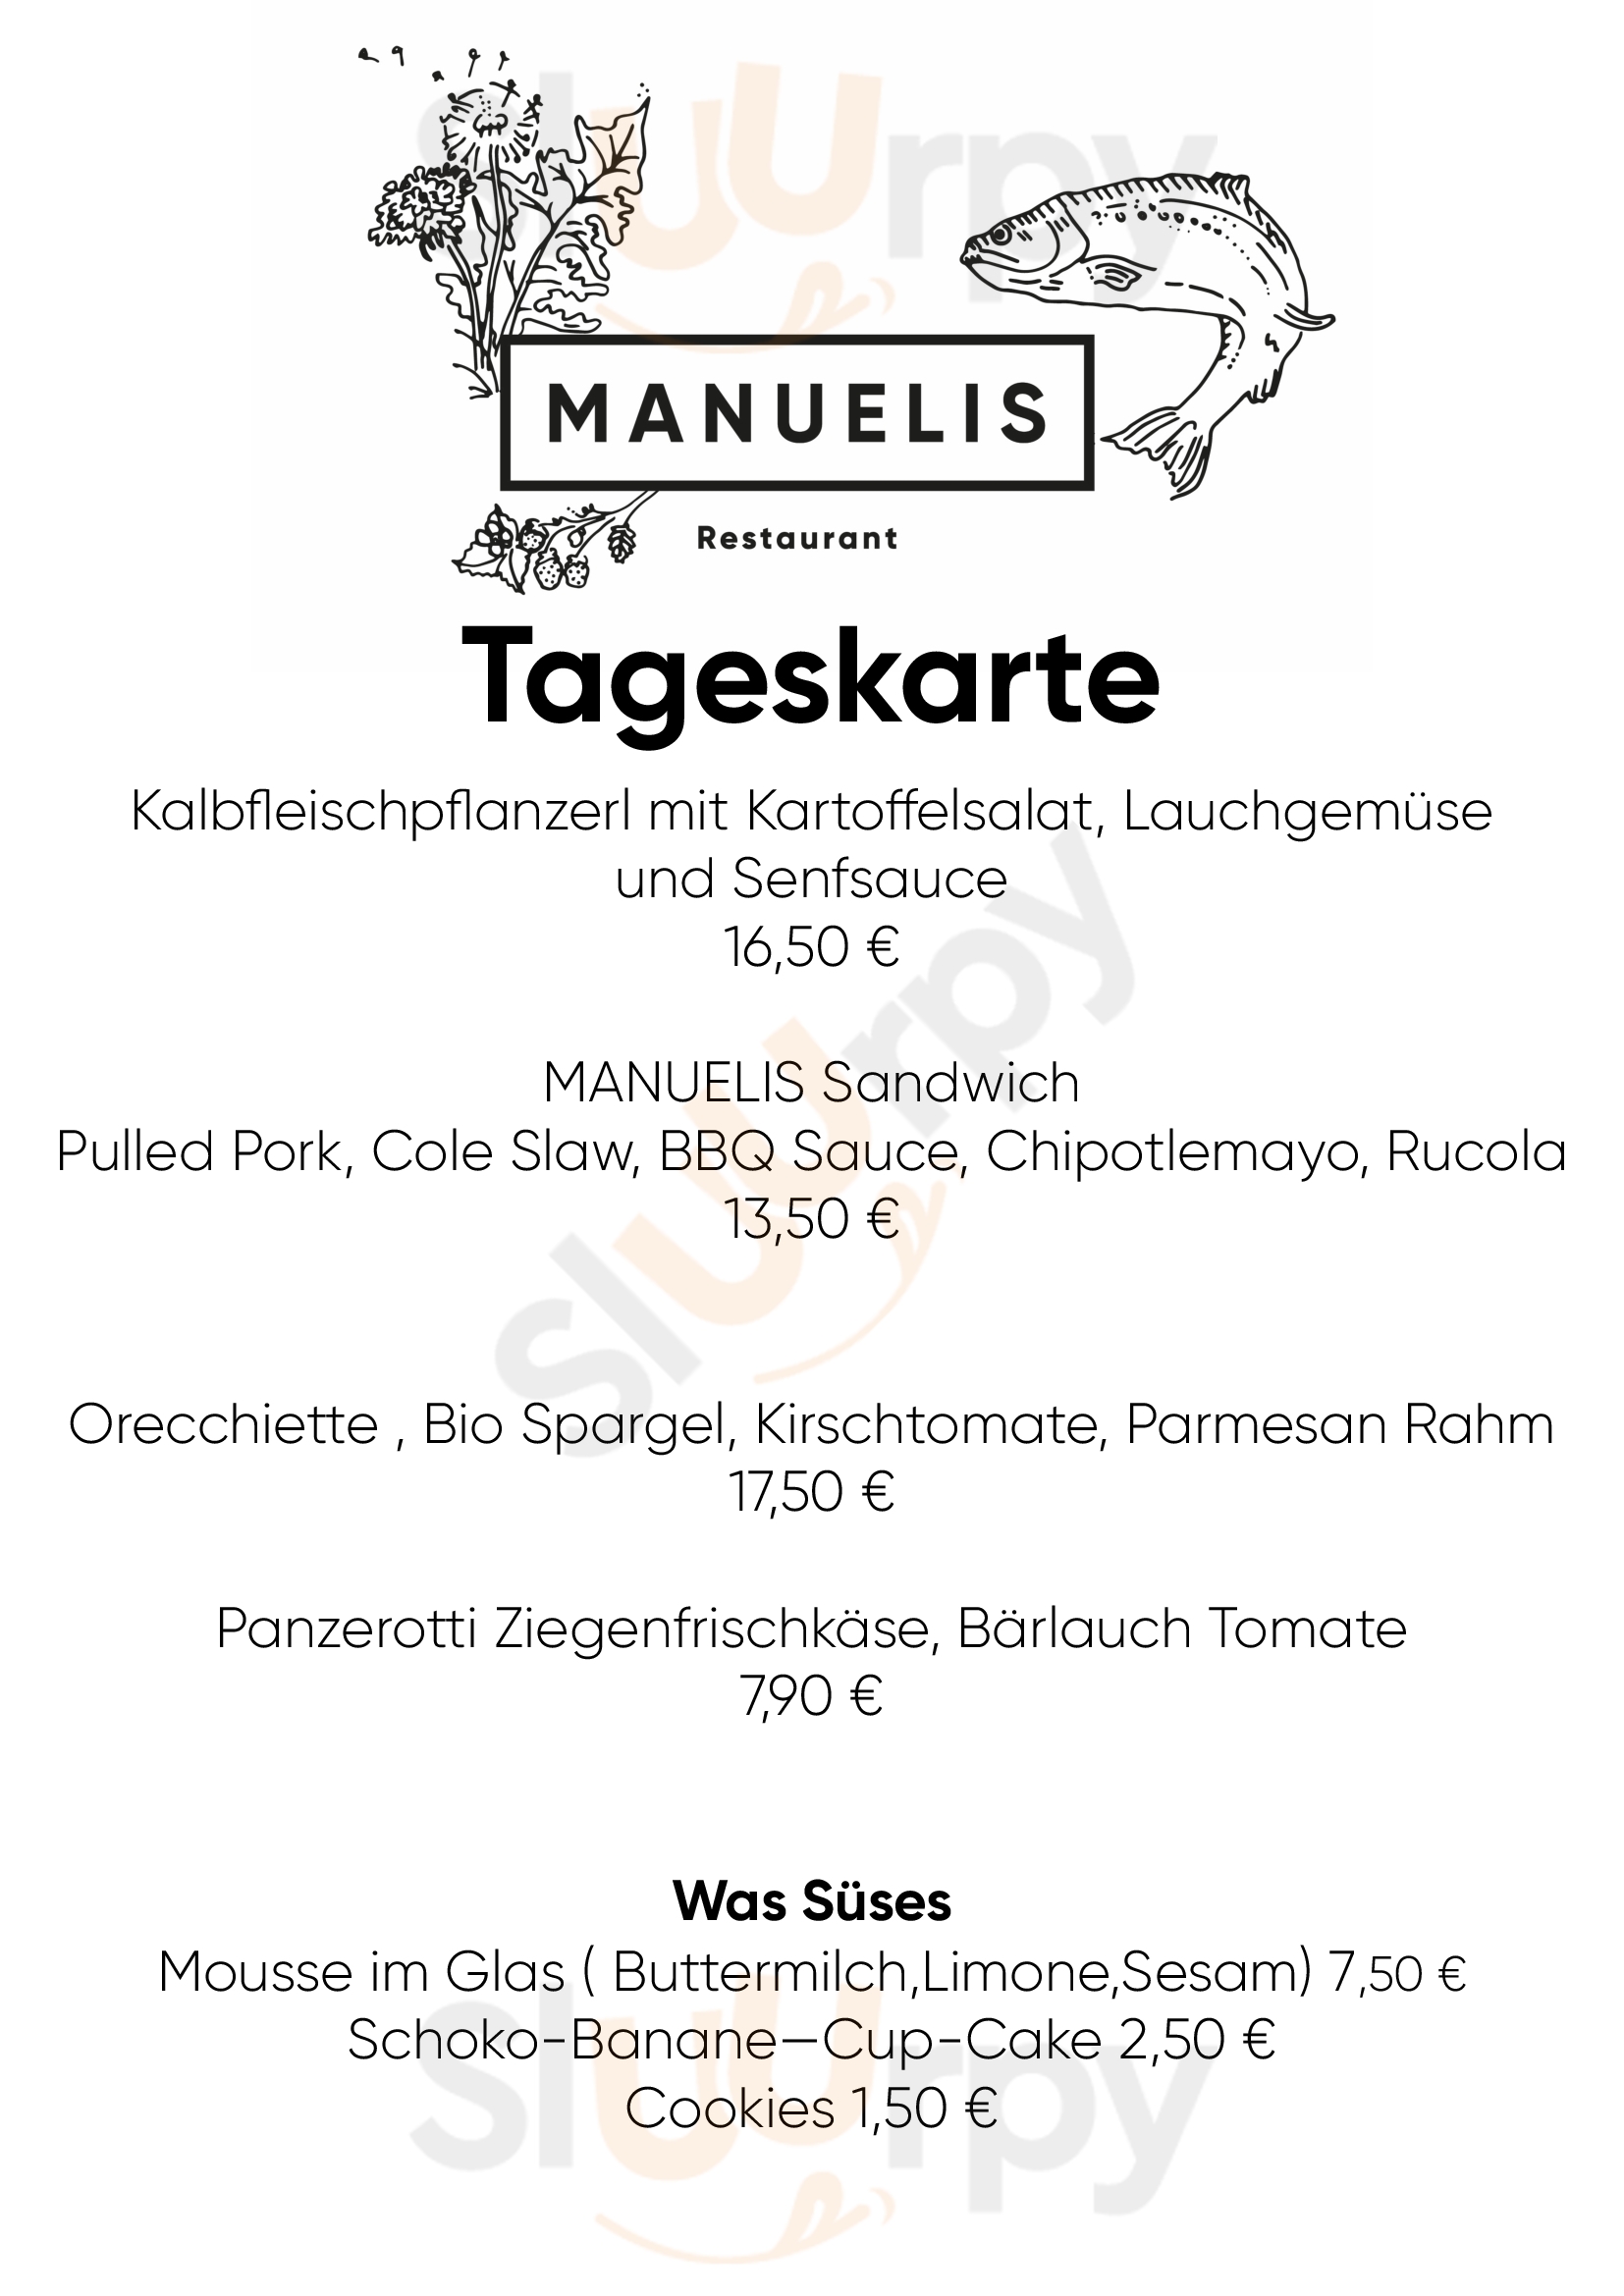 Manuelis Restaurant Miesbach Menu - 1